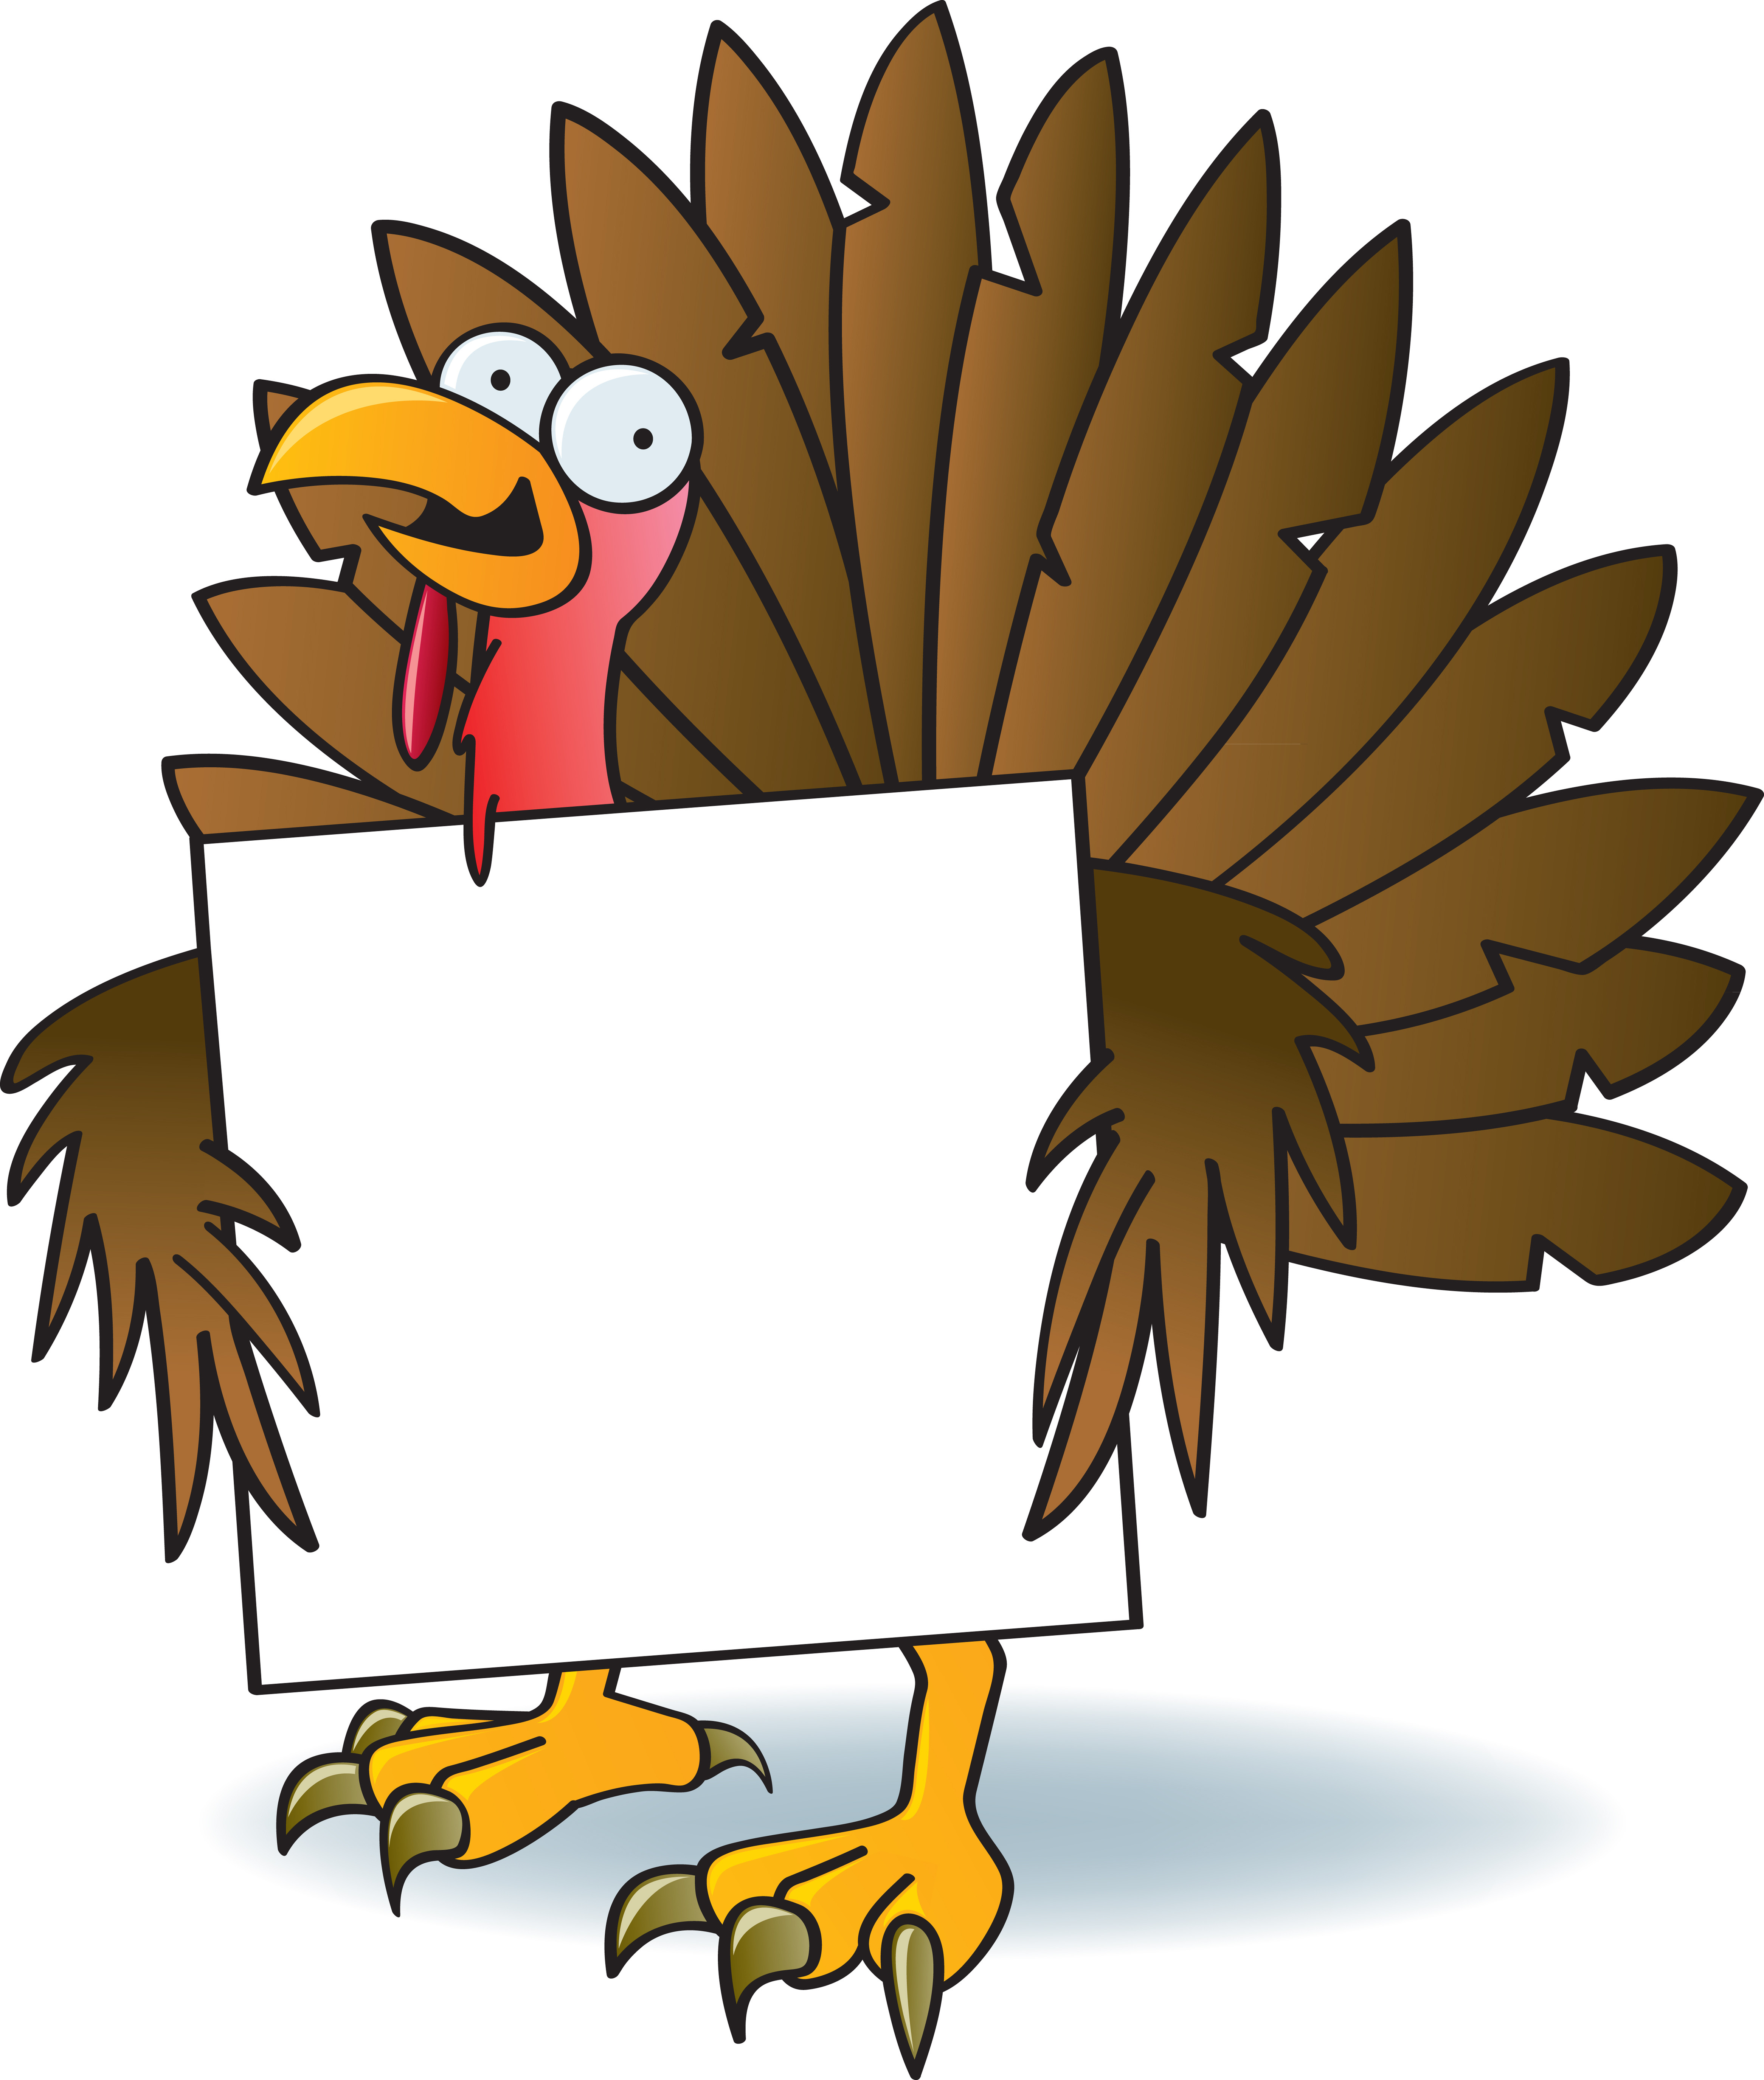 Turkey Thanksgiving Cartoon
 Thanksgiving Cartoons to Pin on Pinterest PinsDaddy